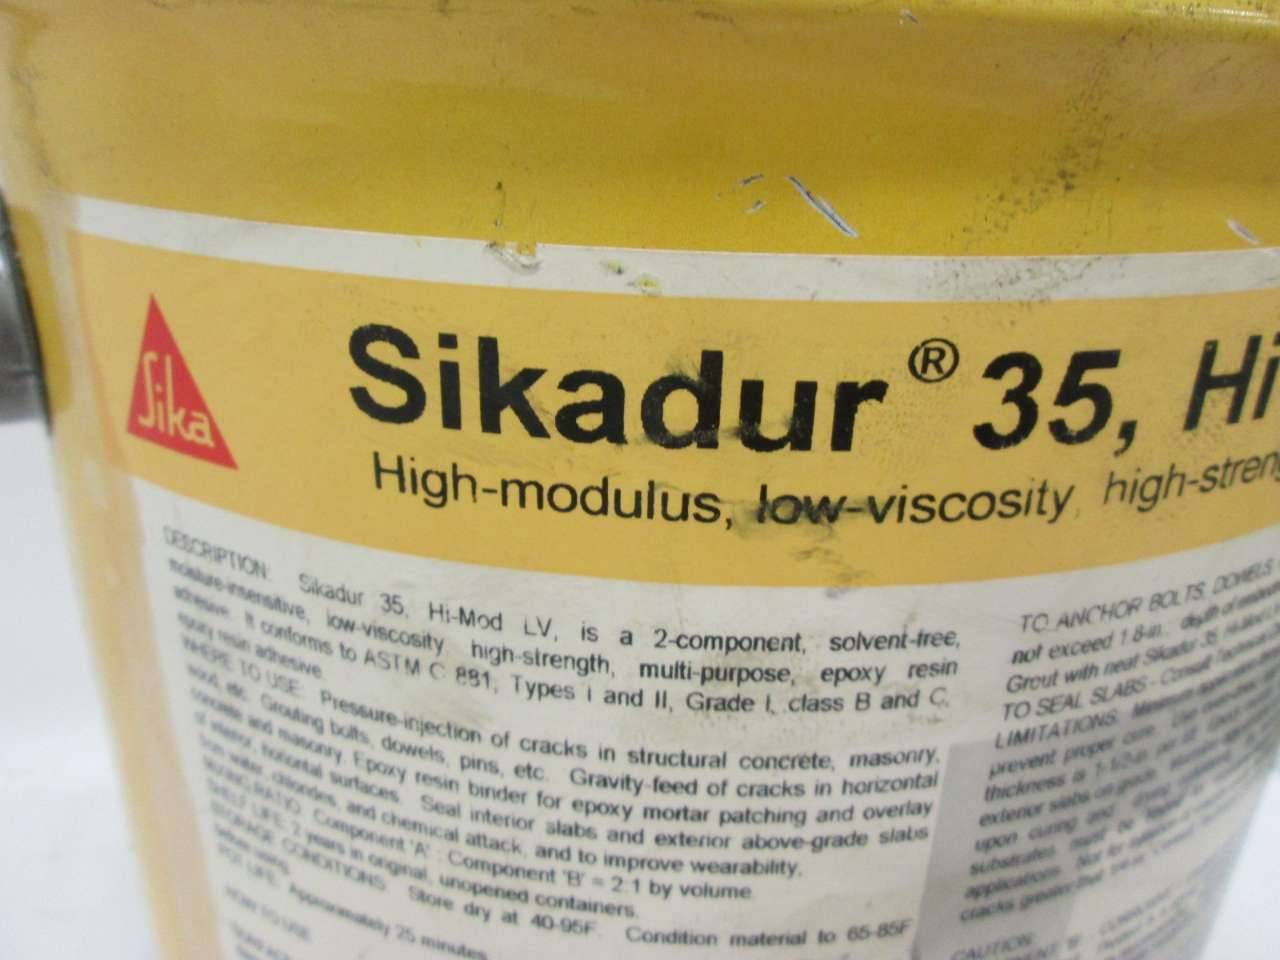 Sika 35 Hi-mod Lv/lv Lpl Sikadur Approximately 1gal Epoxy Adhesive